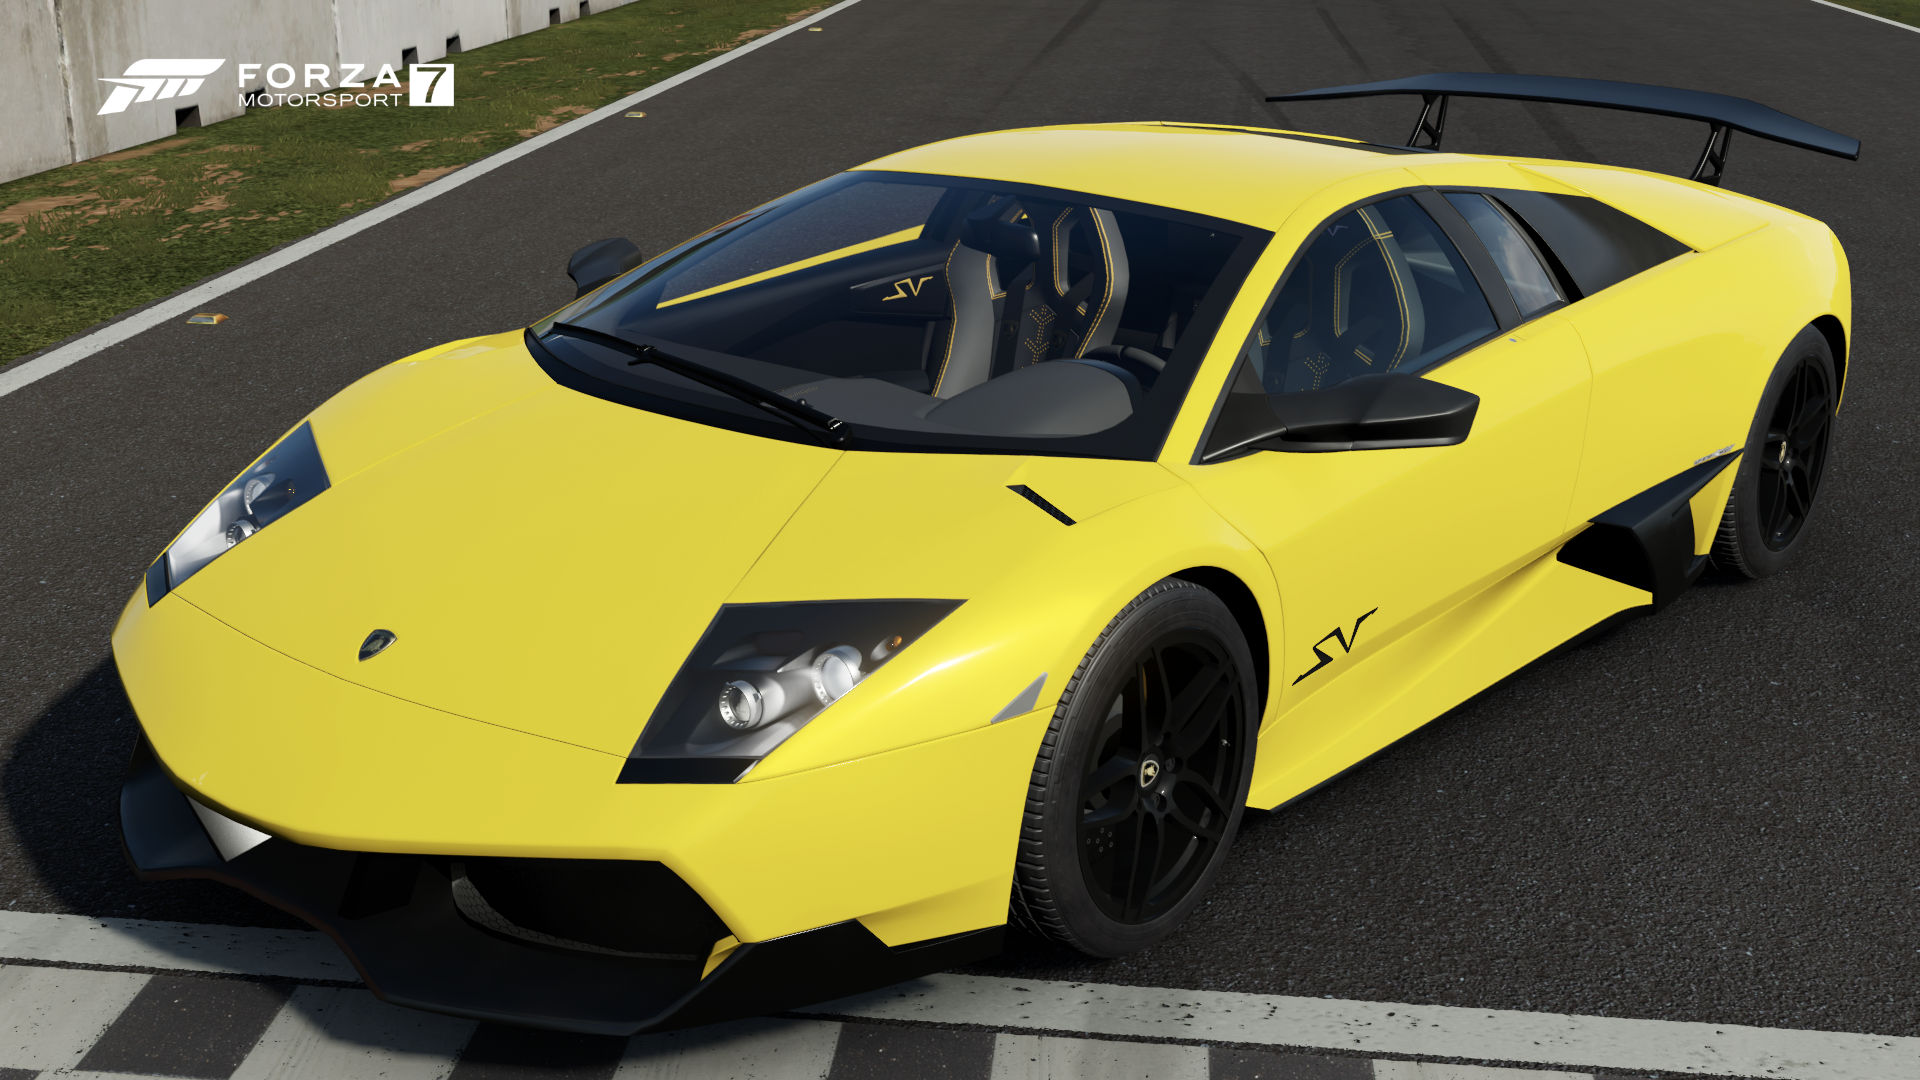 Lamborghini Murciélago LP 670-4 SV | Forza Motorsport Wiki ...